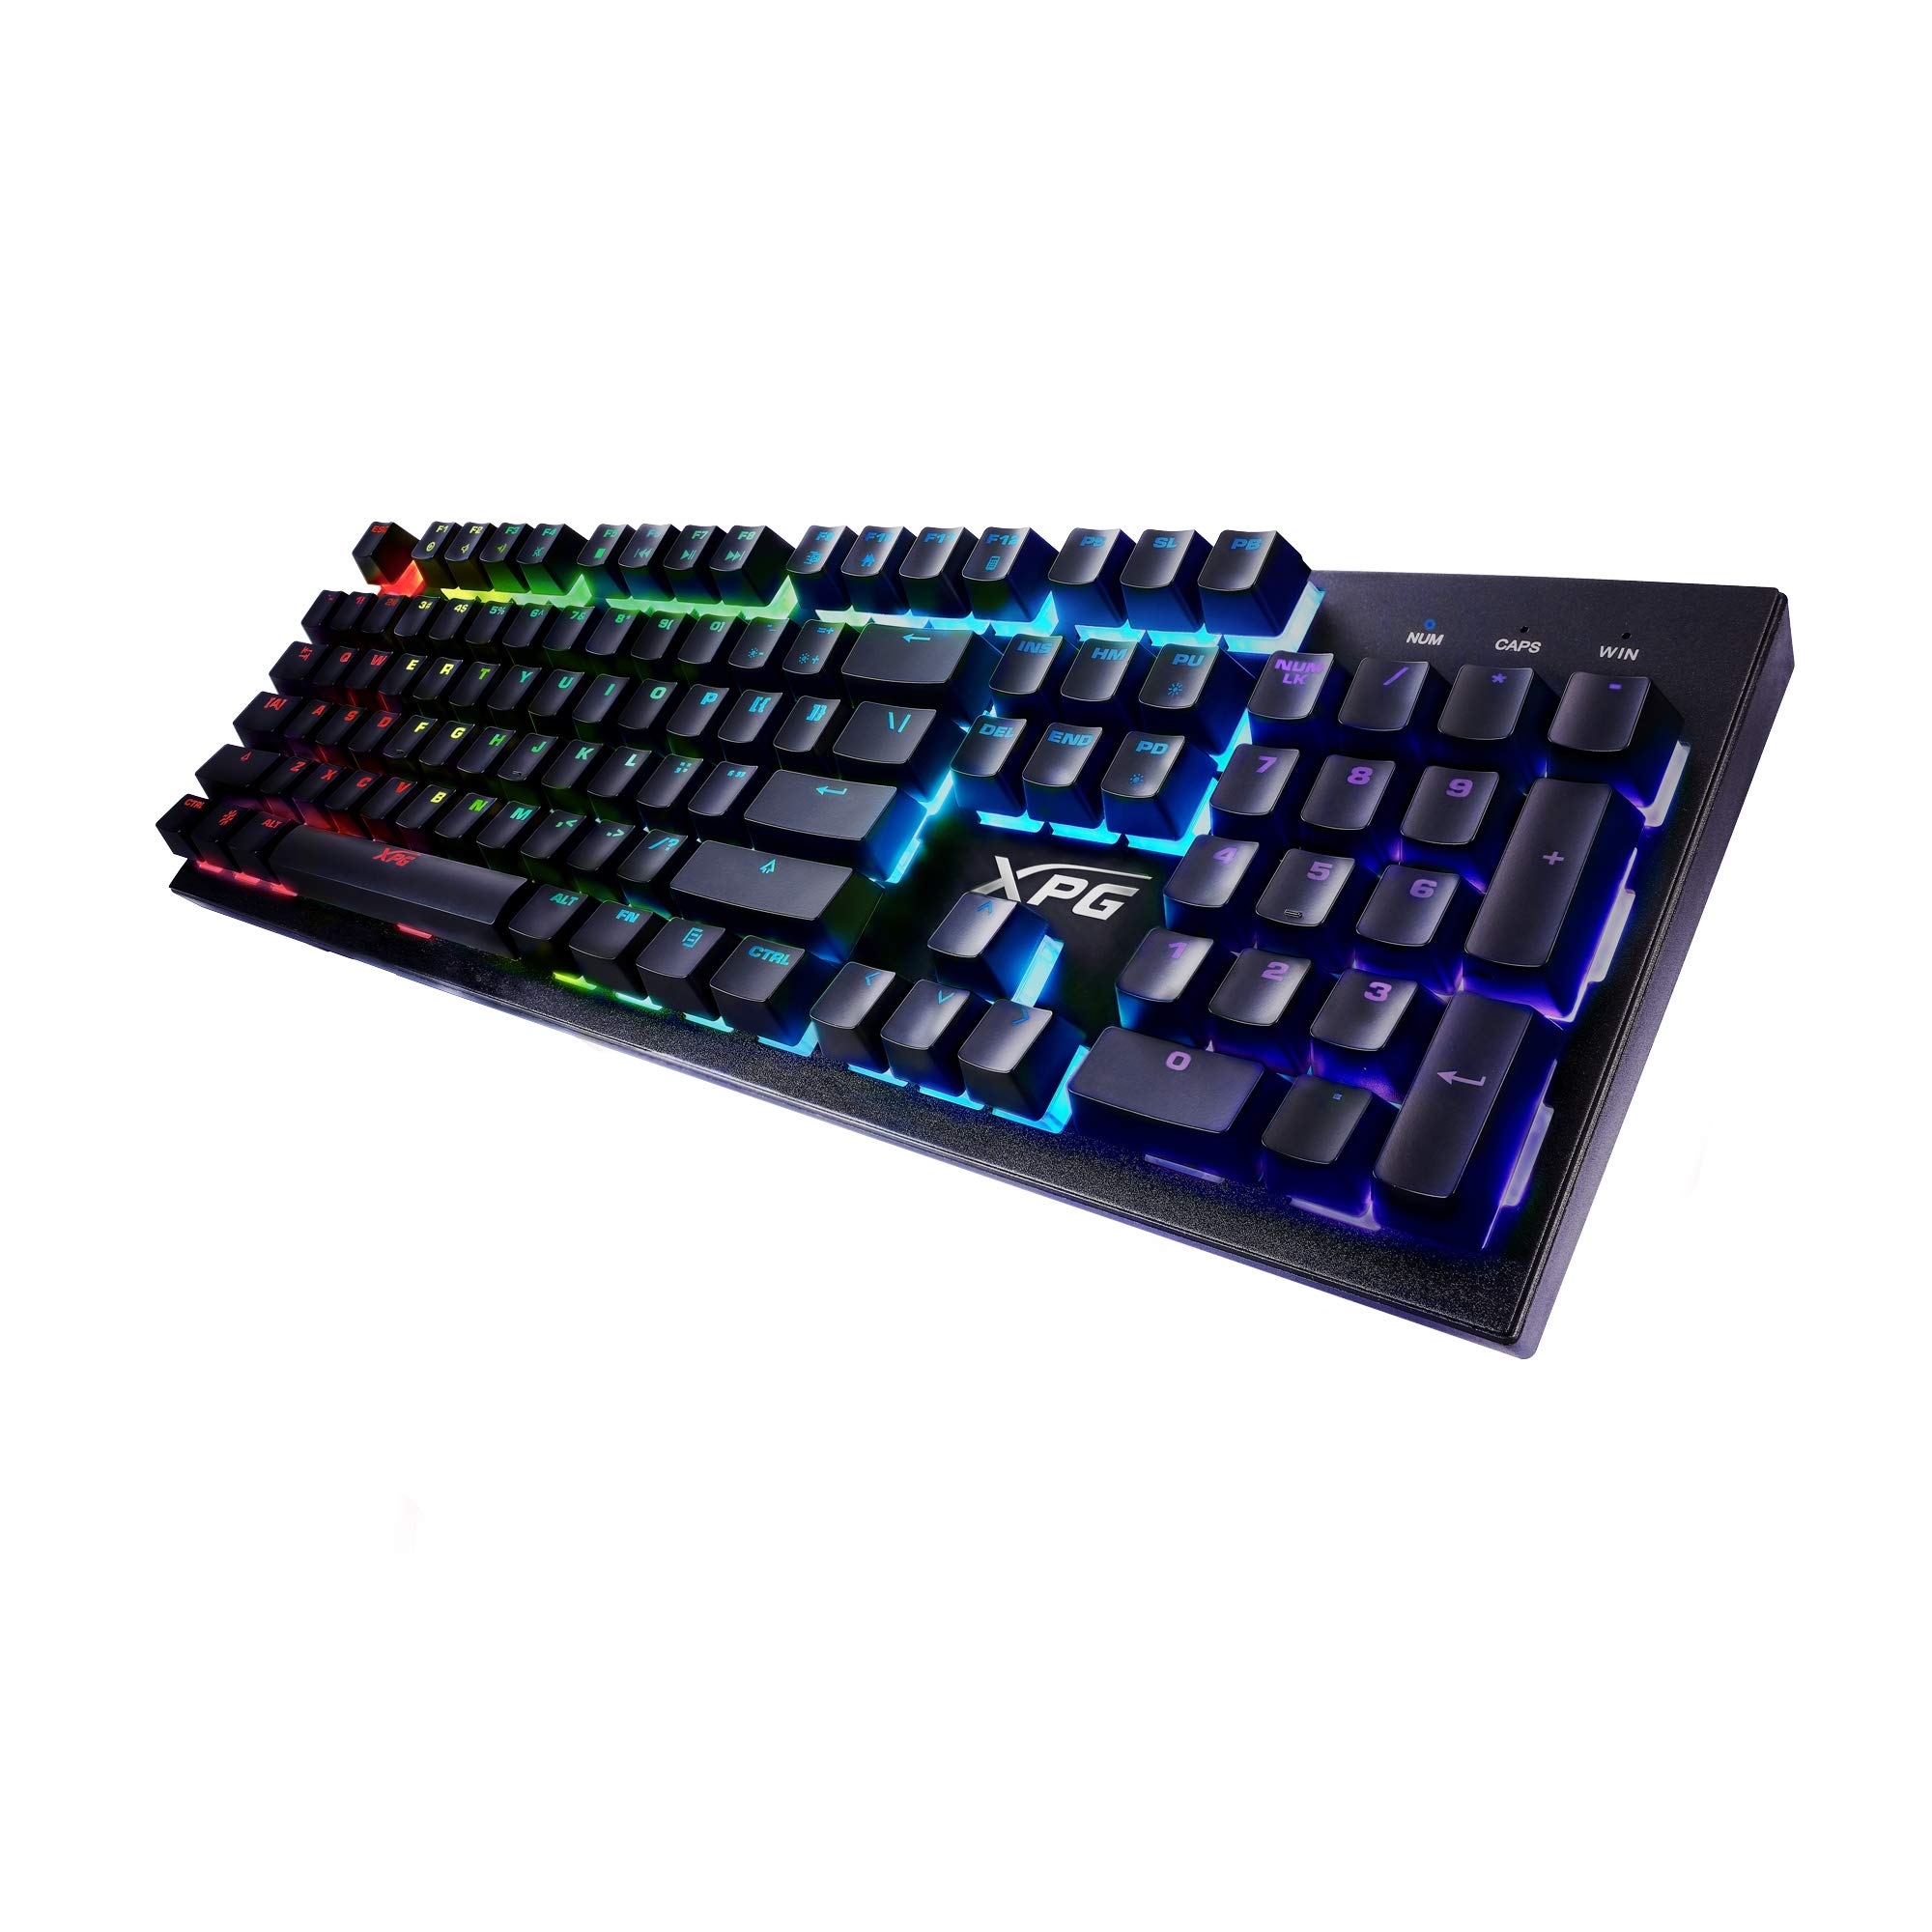 Adata XPG Infarex K10 RGB Gaming Mem-chanical Keyboard